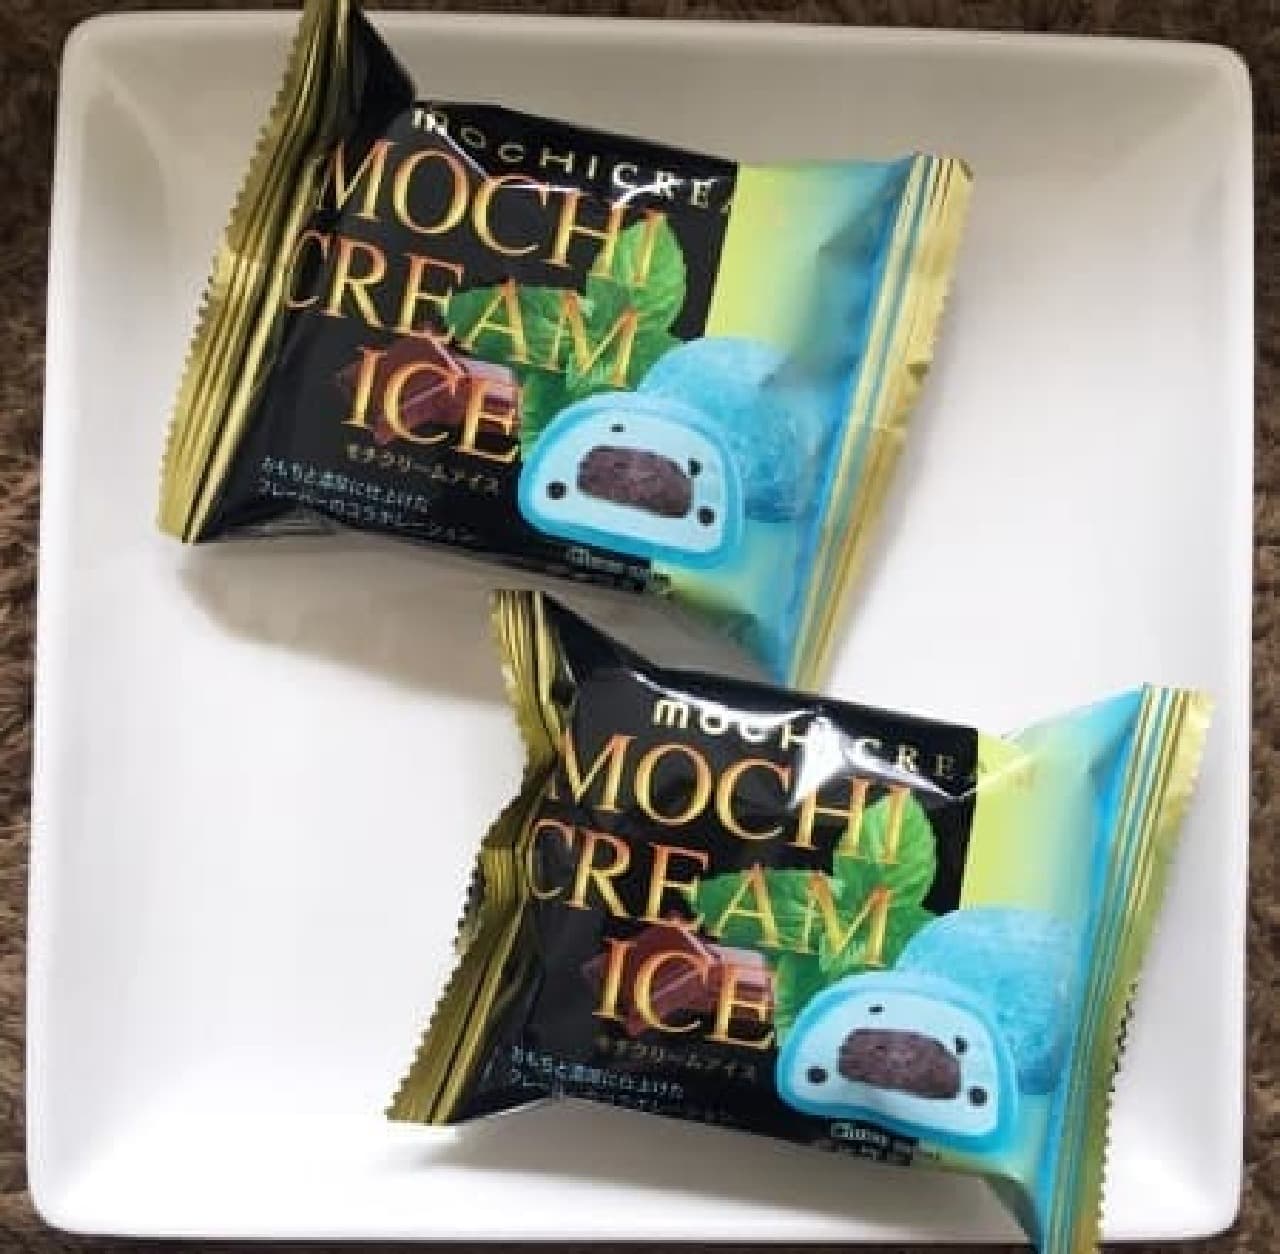 Mochi cream ice chocolate mint